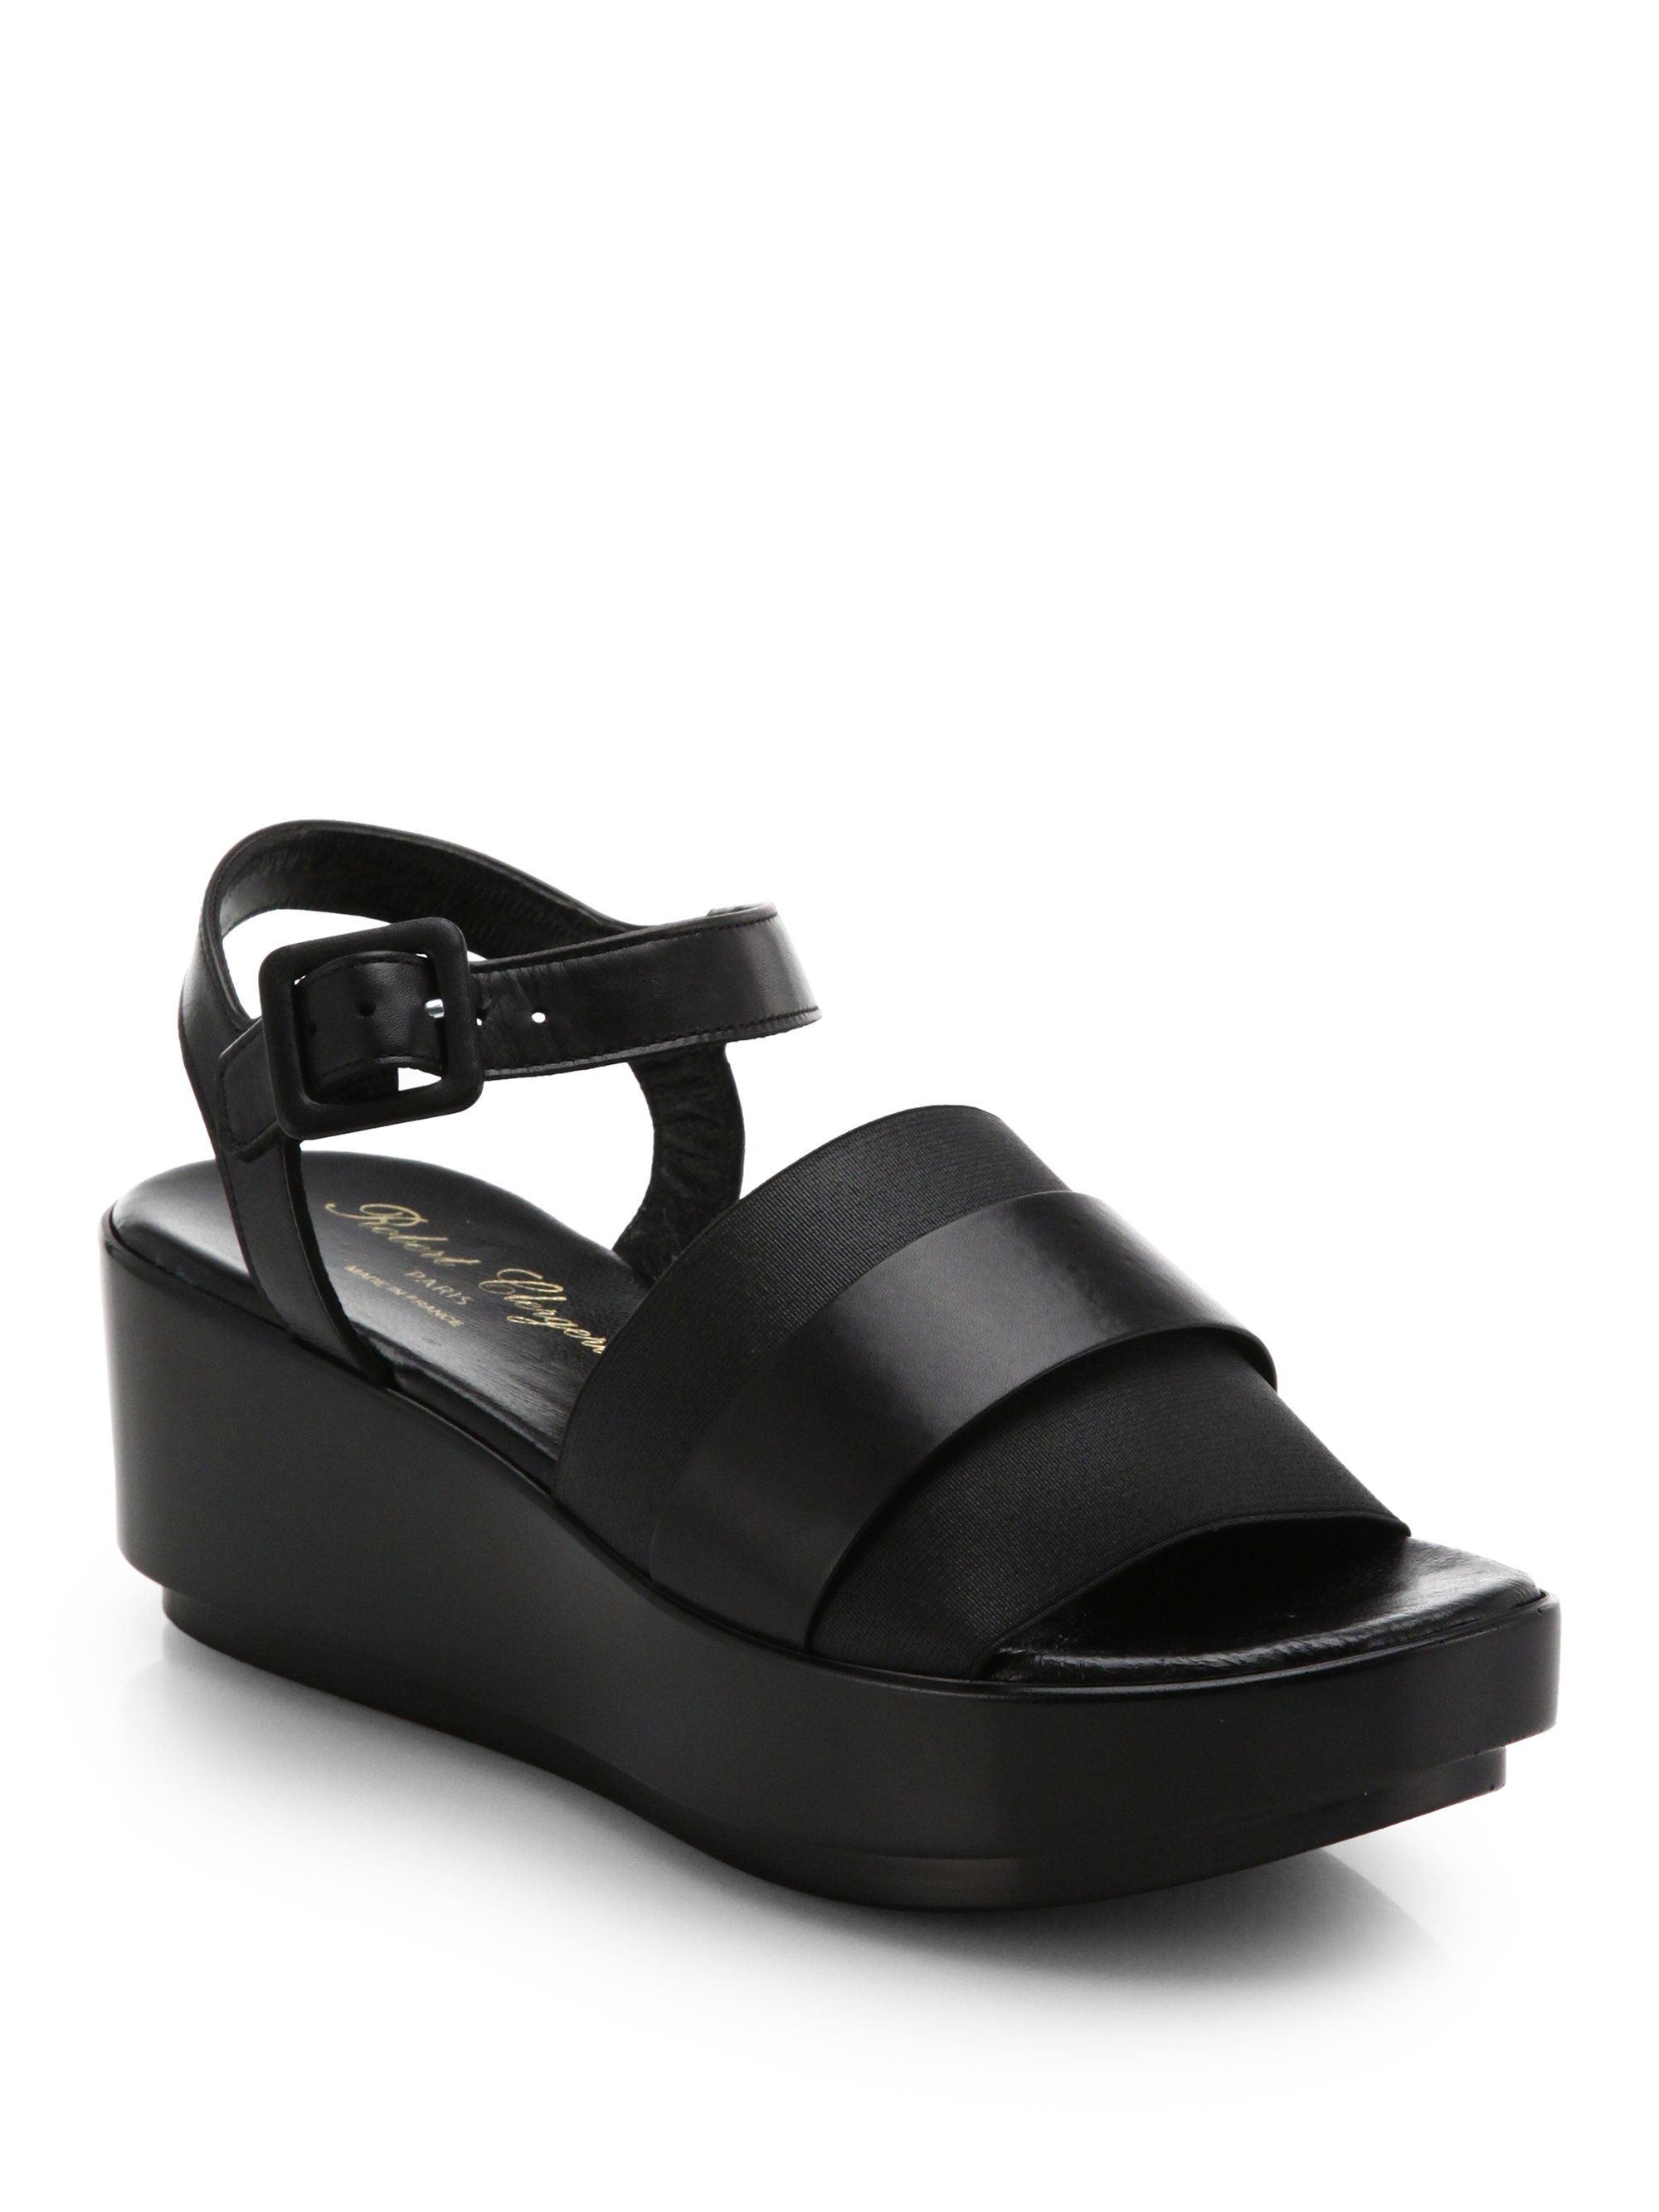 Robert Clergerie Leather & Elastic Platform Sandals in Black - Lyst